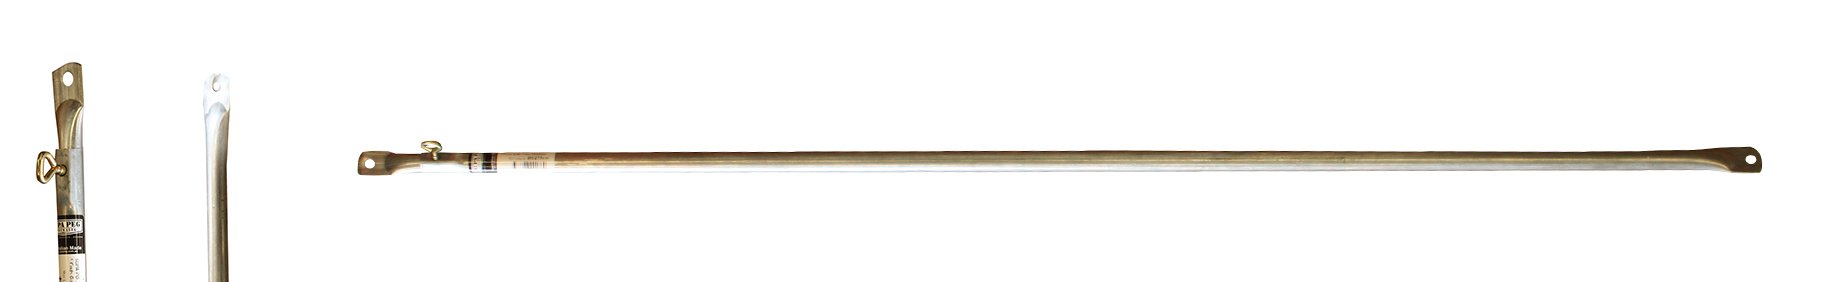 Spreader Pole 19/22.2mm 275cm